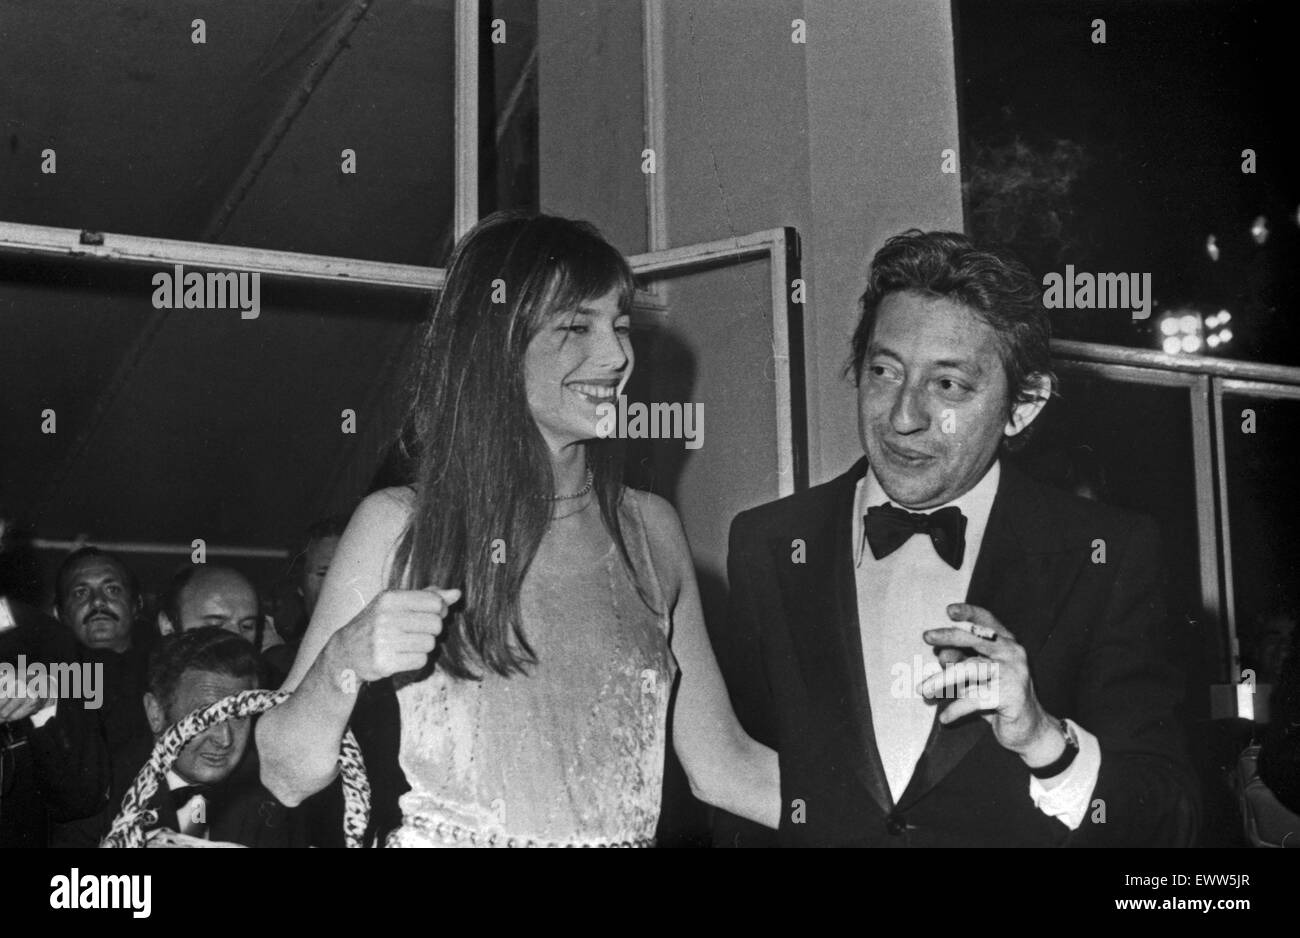 Jane Birkin Serge Gainsbourg und beim Festival du Film de Cannes 1974, Frankreich 1970 er Jahre. Jane Birkin et Serge Gainsbourg au Festival de Cannes 1974, la France des années 1970. Banque D'Images